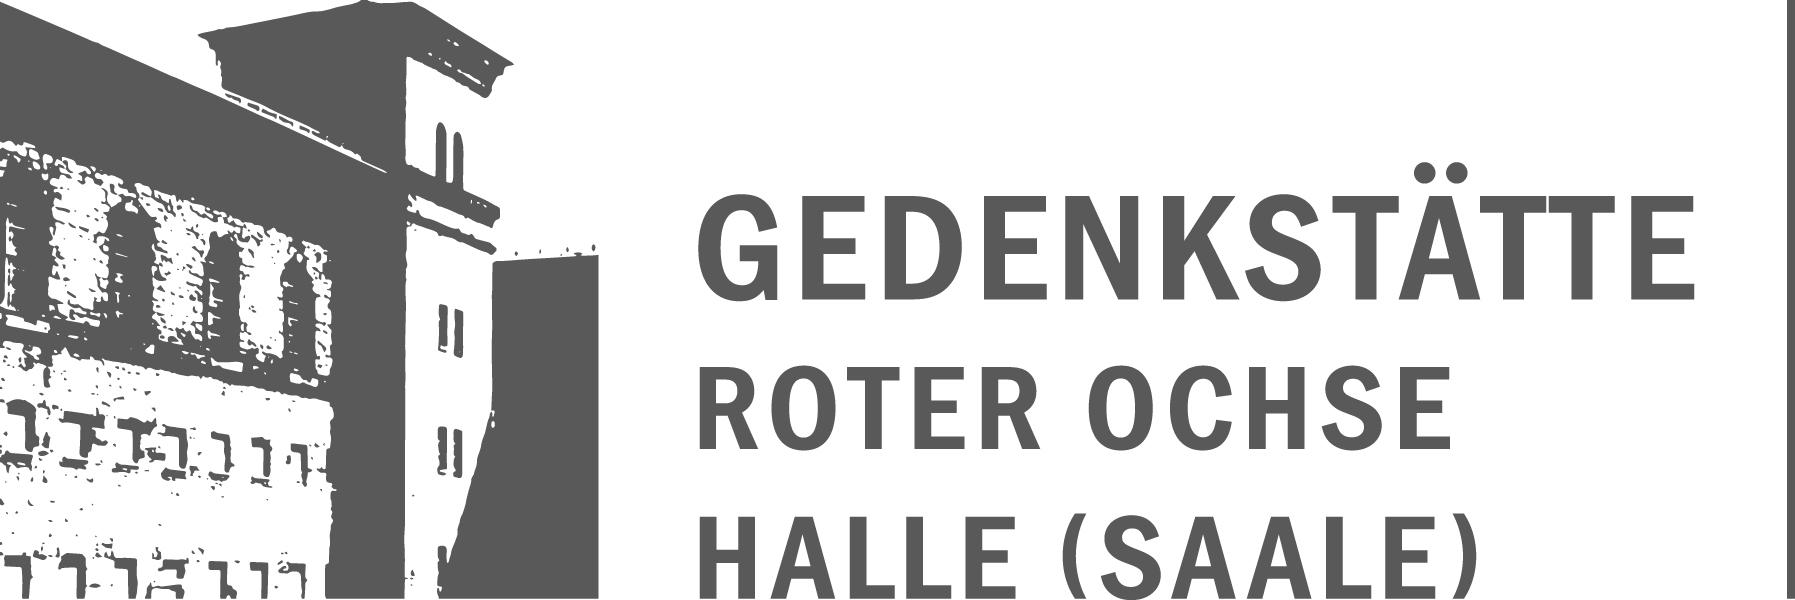 Gedenkstätte ROTER OCHSE Halle (Saale)